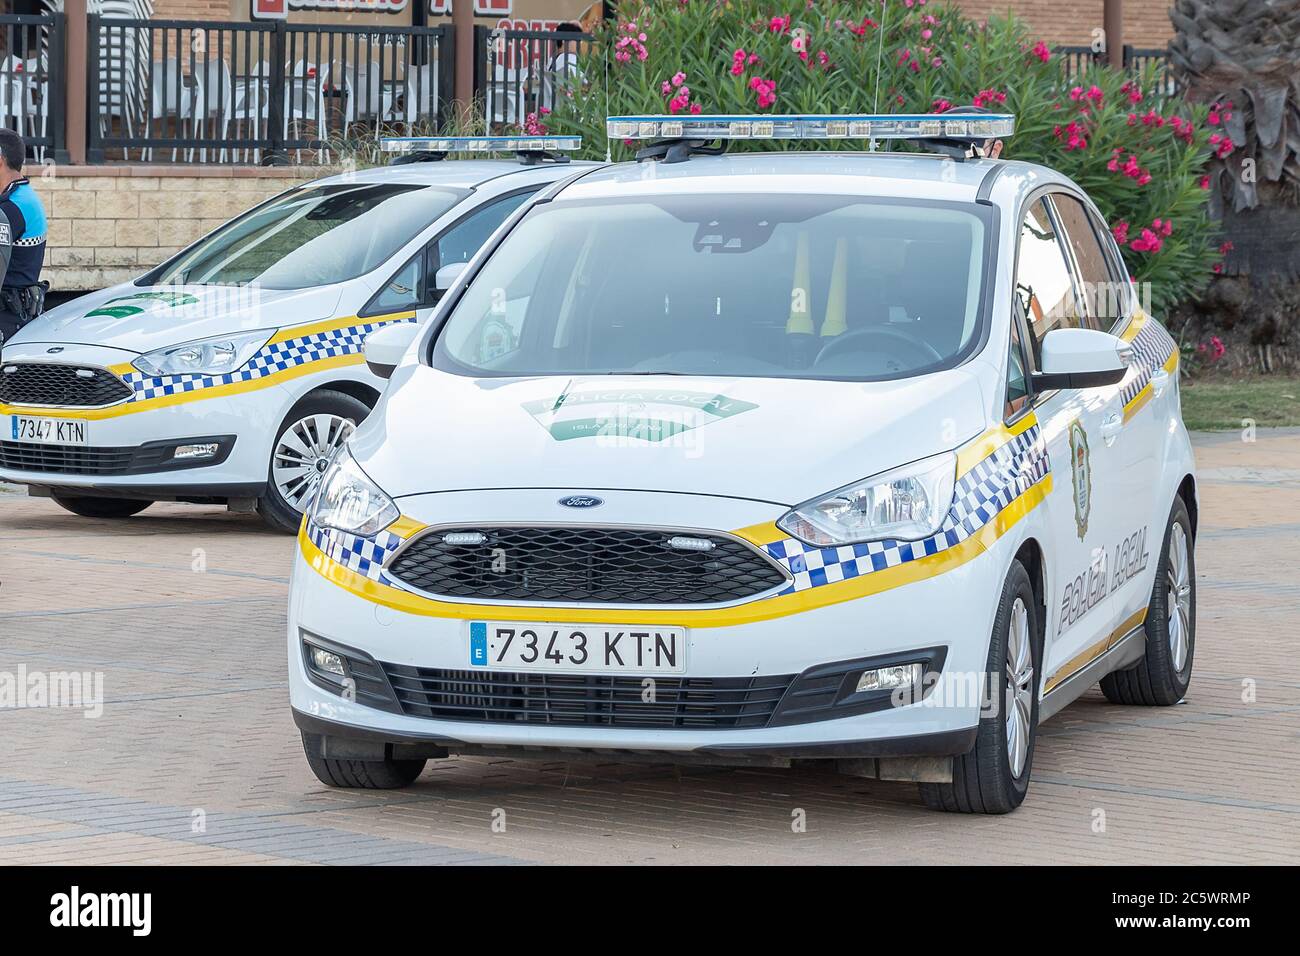 Huelva, Spain - July 4, 2020: Spanish police  cars in the Islantilla beach promenade Stock Photo